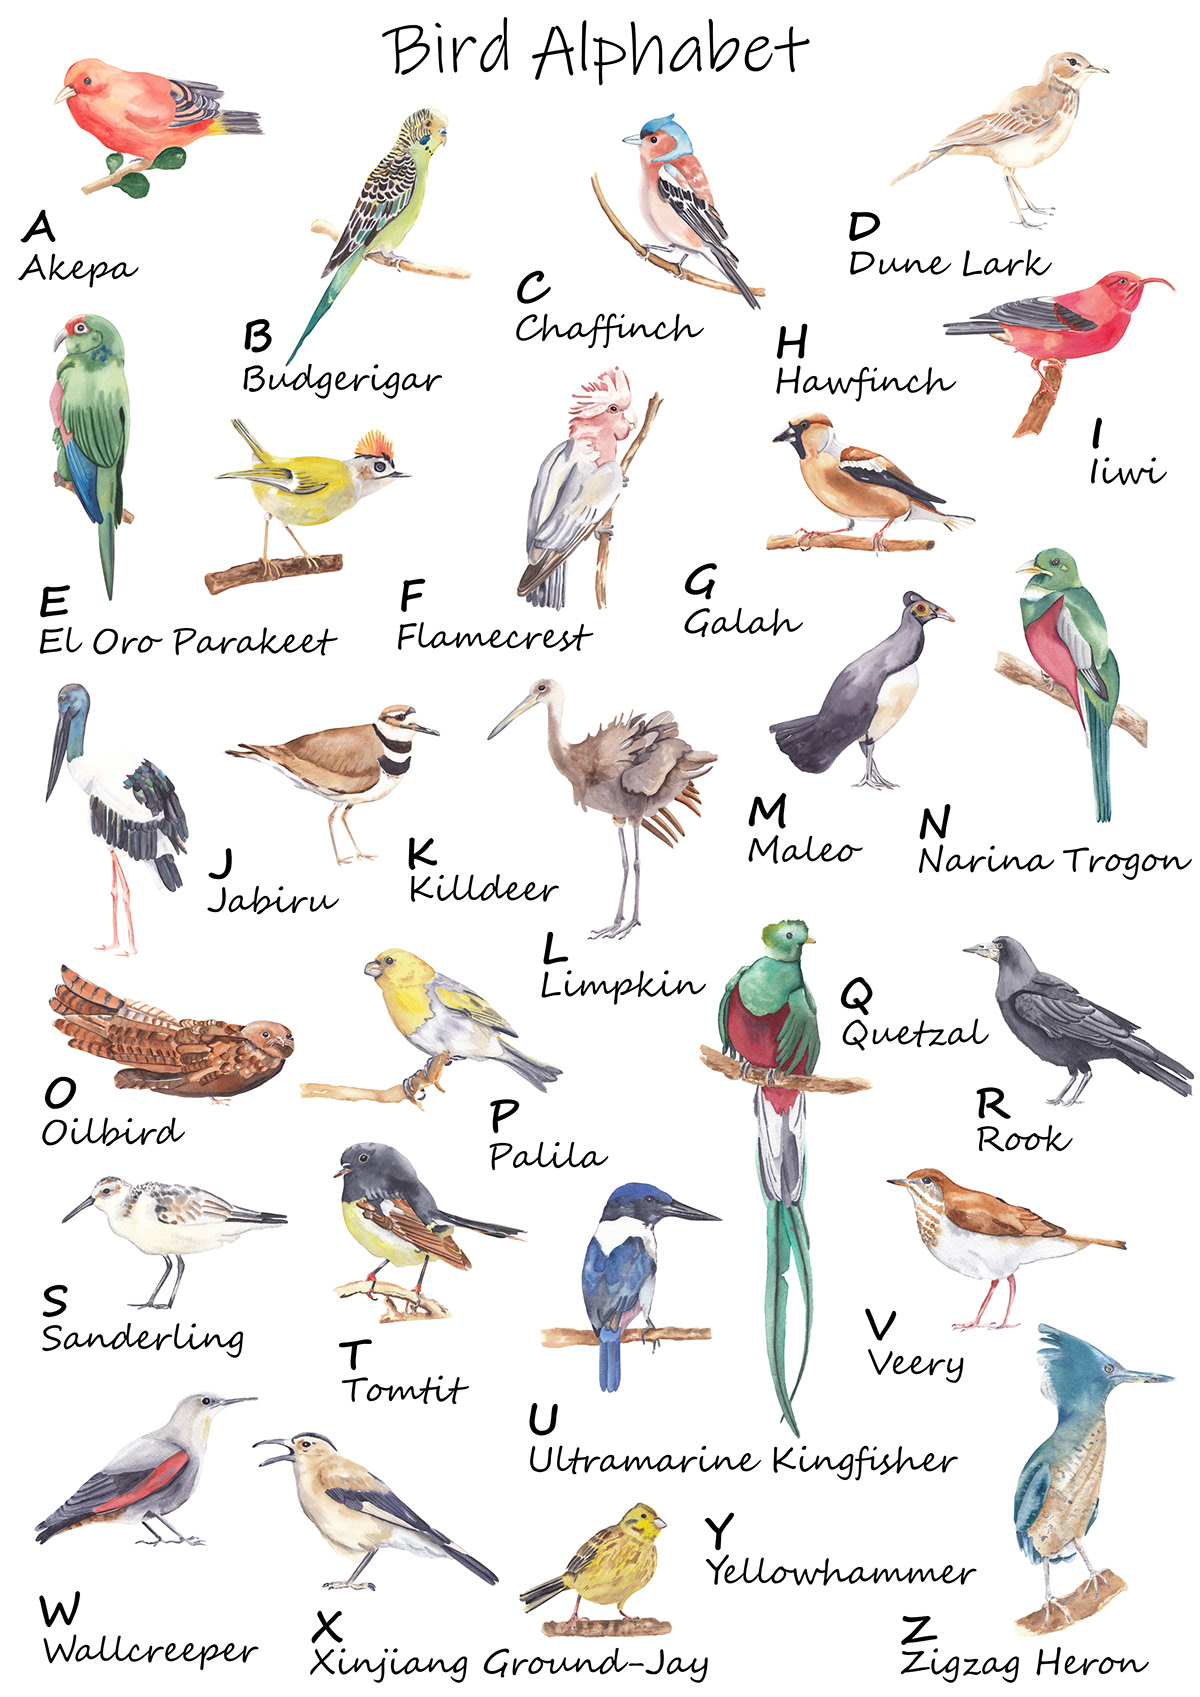 Watercolor Bird Alphabet on Behance